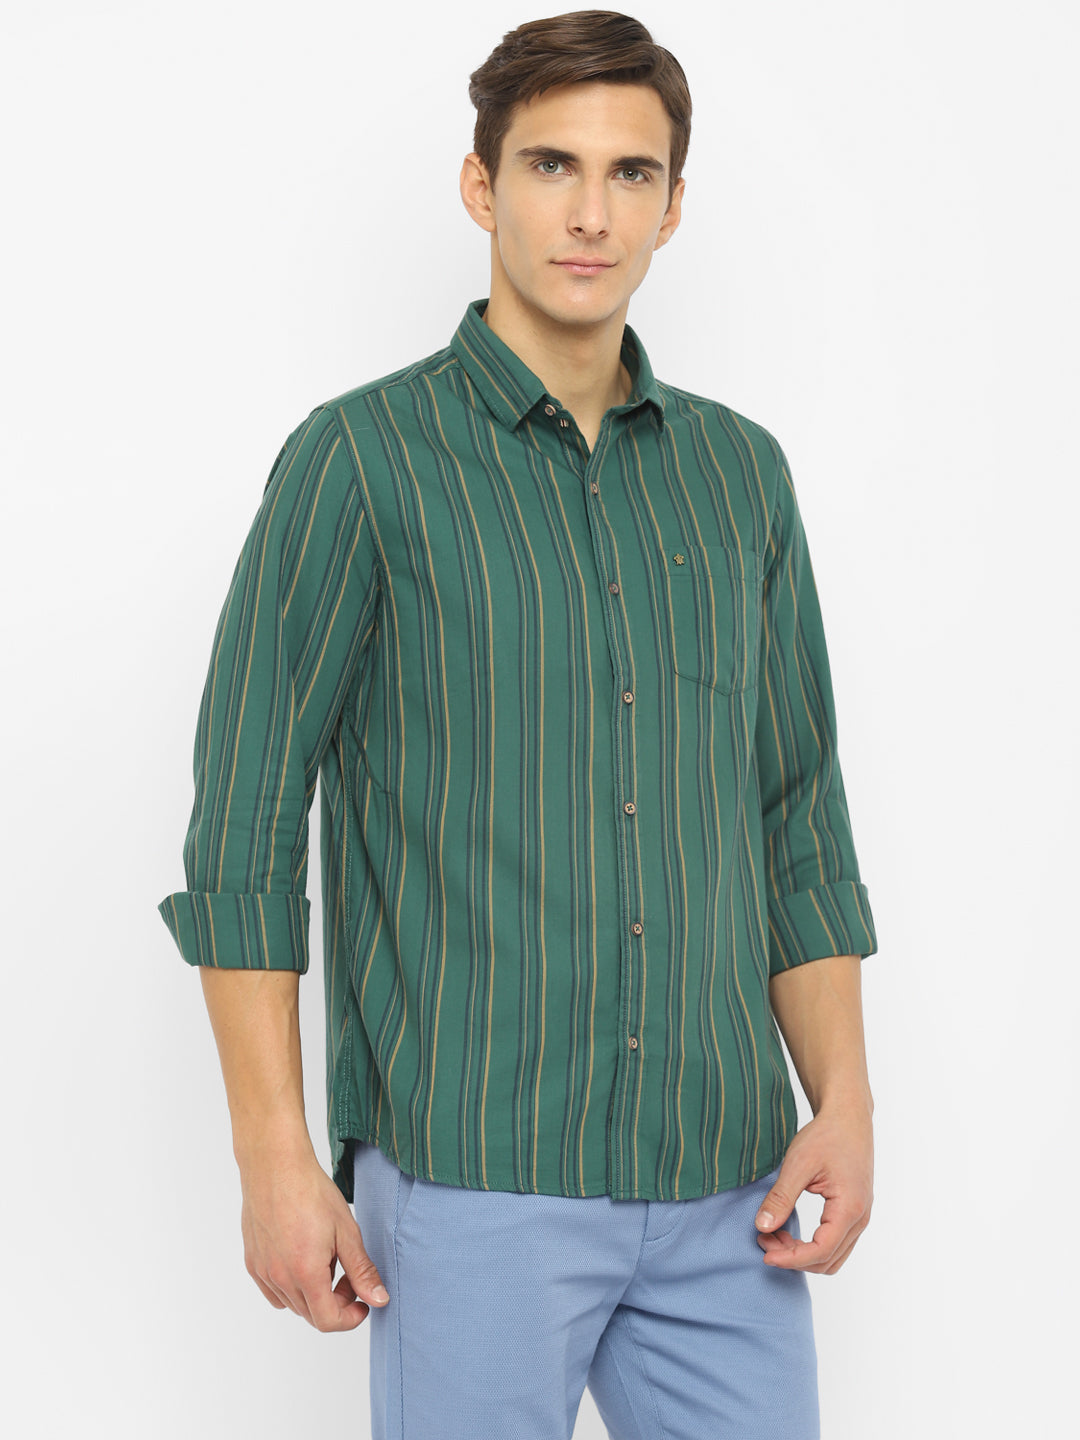 100% Cotton Indigo Dark Green Striped Slim Fit Full Sleeve Casual Shirt